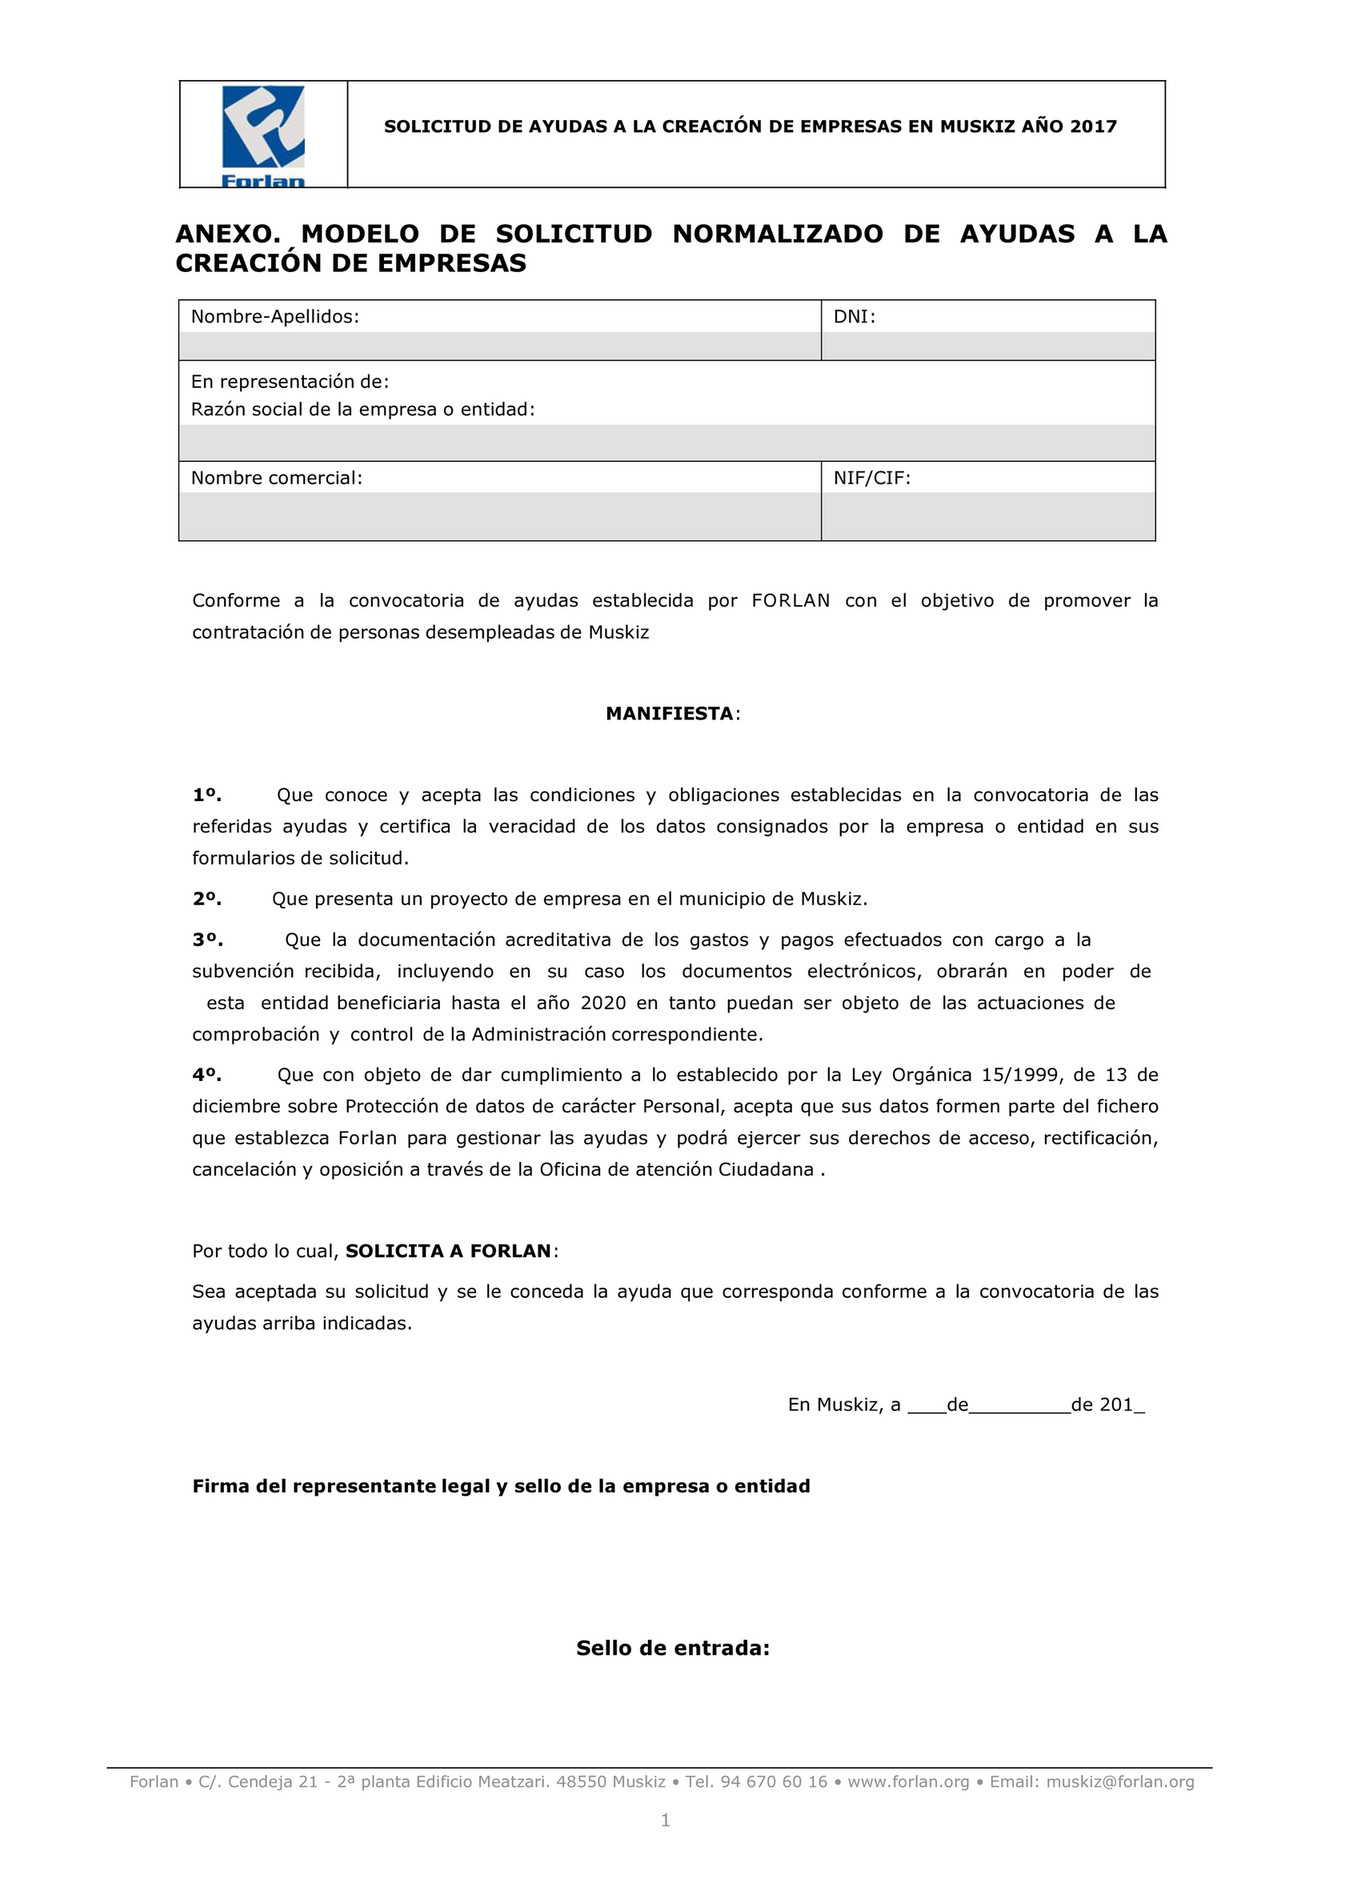 Forlan - Plan Dinamización Muskiz - Modelo Solicitud de Ayudas para Creación  de Empresas - 2017 - Página 2 - Created with 